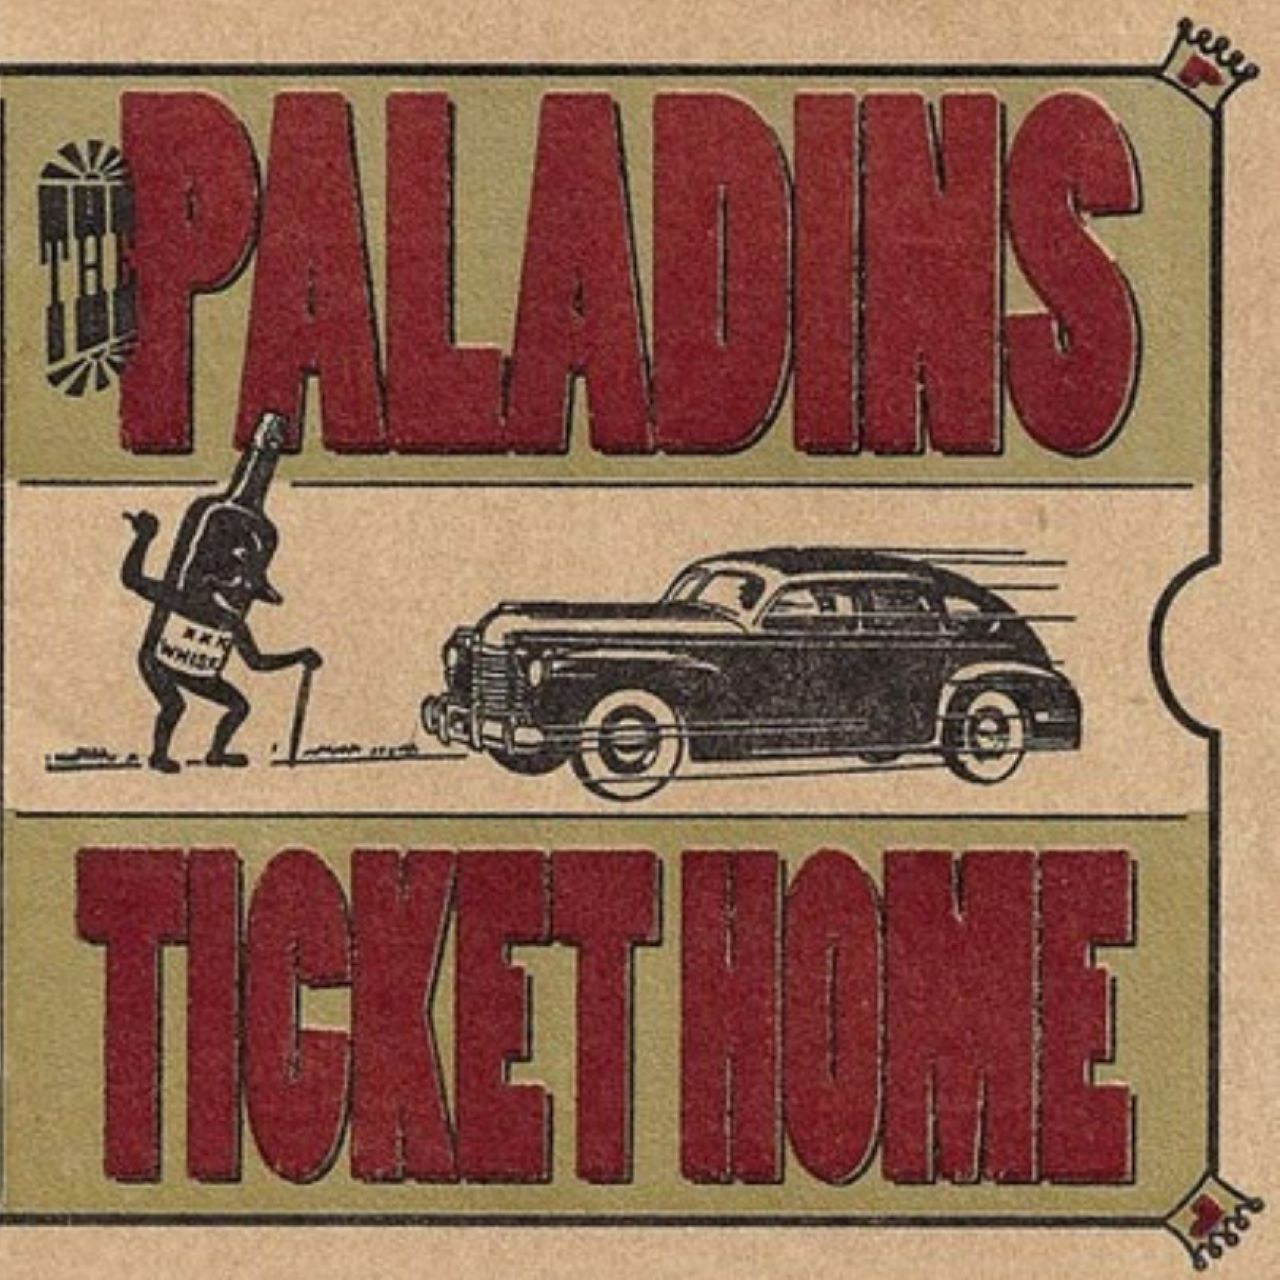 Paladins – Ticket Home cover album